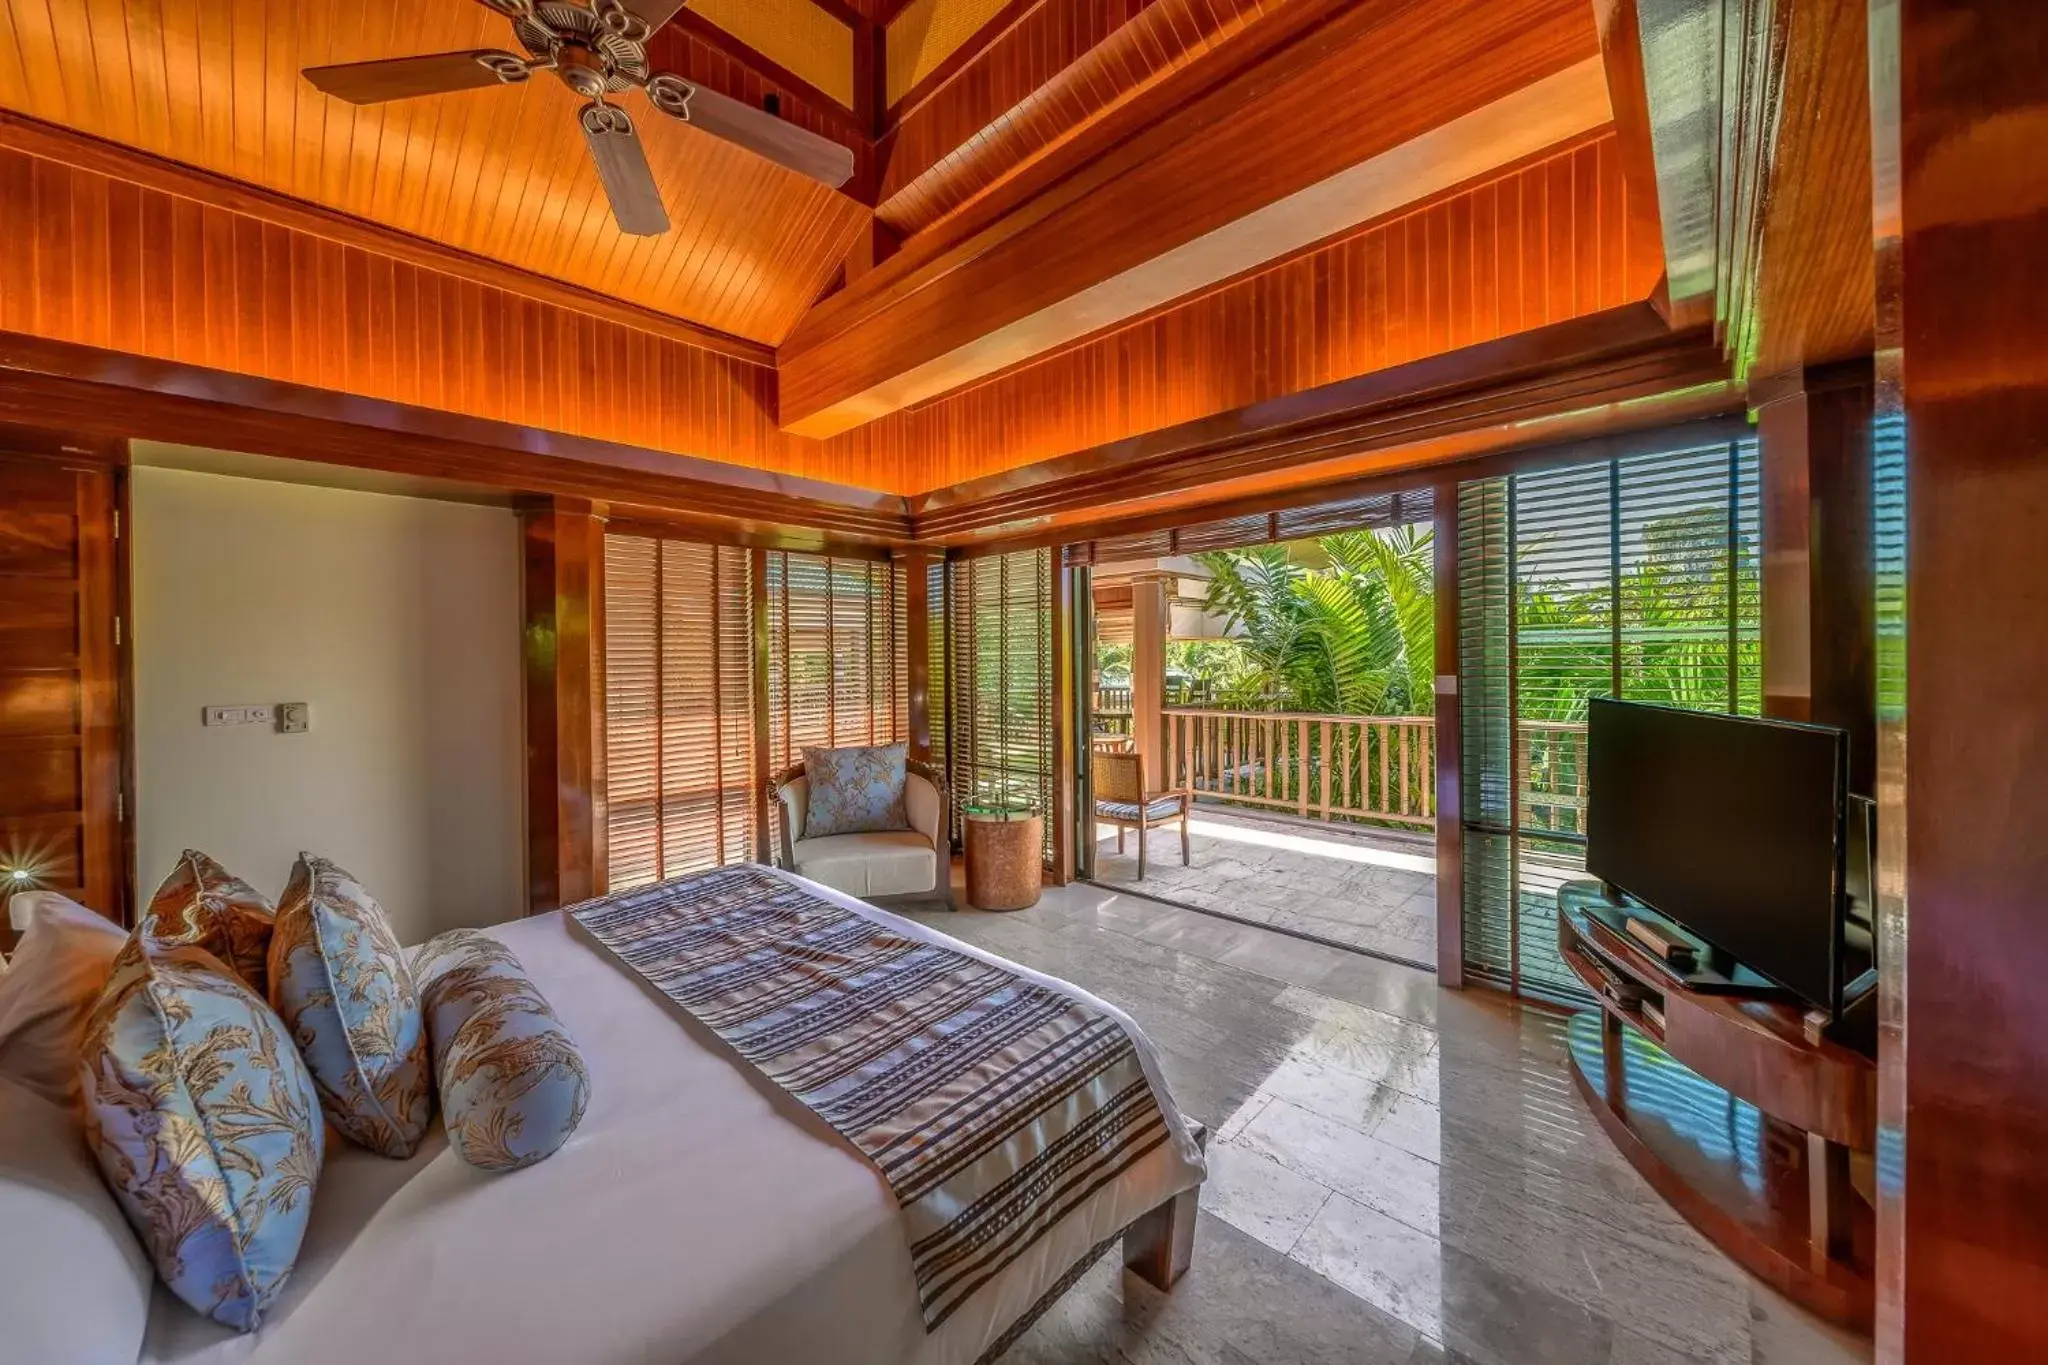 Photo of the whole room in Centara Grand Beach Resort & Villas Krabi